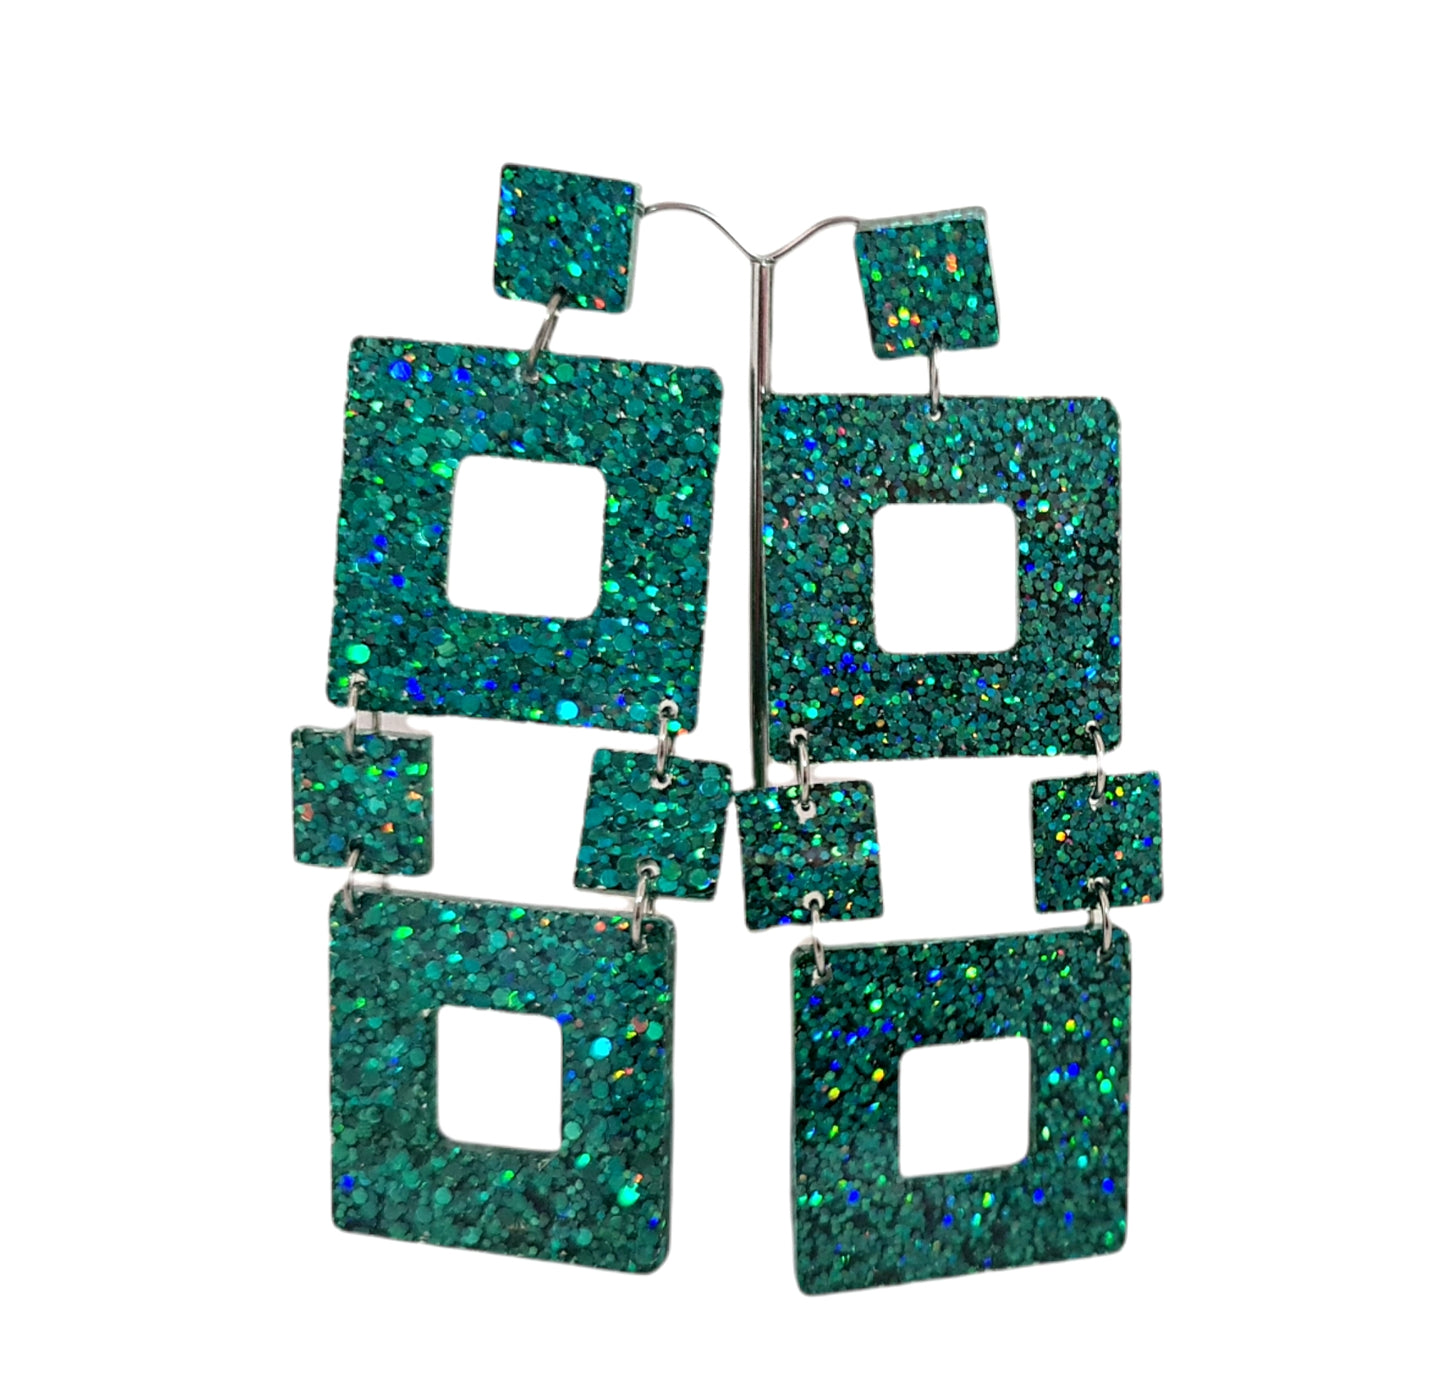 Extra Long Square Glitter Earrings, Dangle Statement Earrings, 11cm long, Sea Green Glitter Earrings